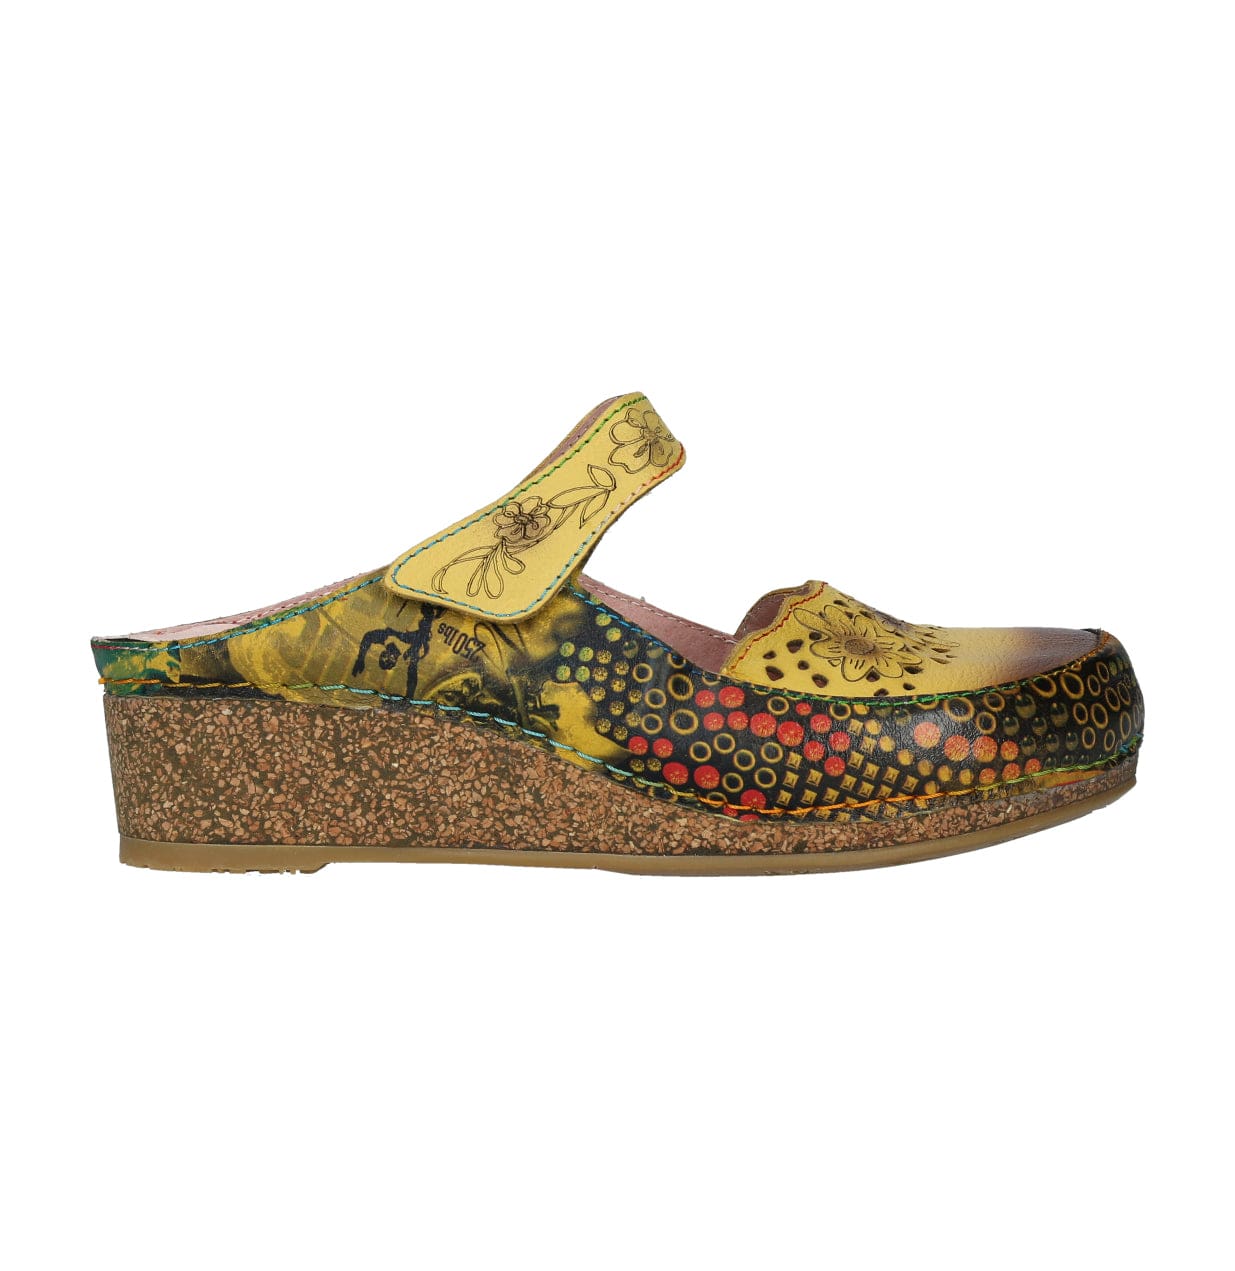 FACSCINEO 33 Art Shoes - 35 / Yellow - Mule